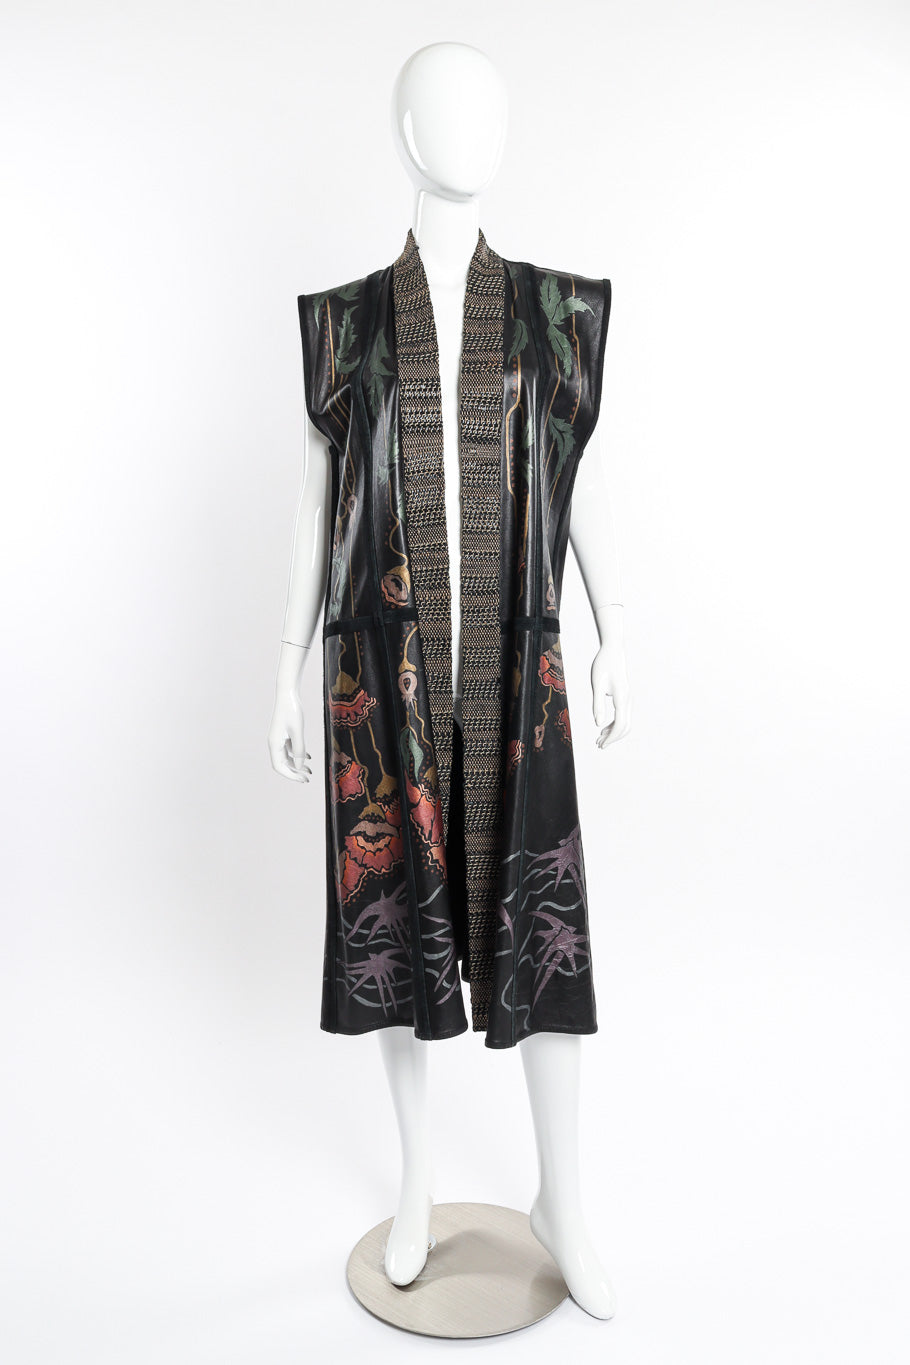 Vintage Painted Leather Vest front on mannequin @recessla